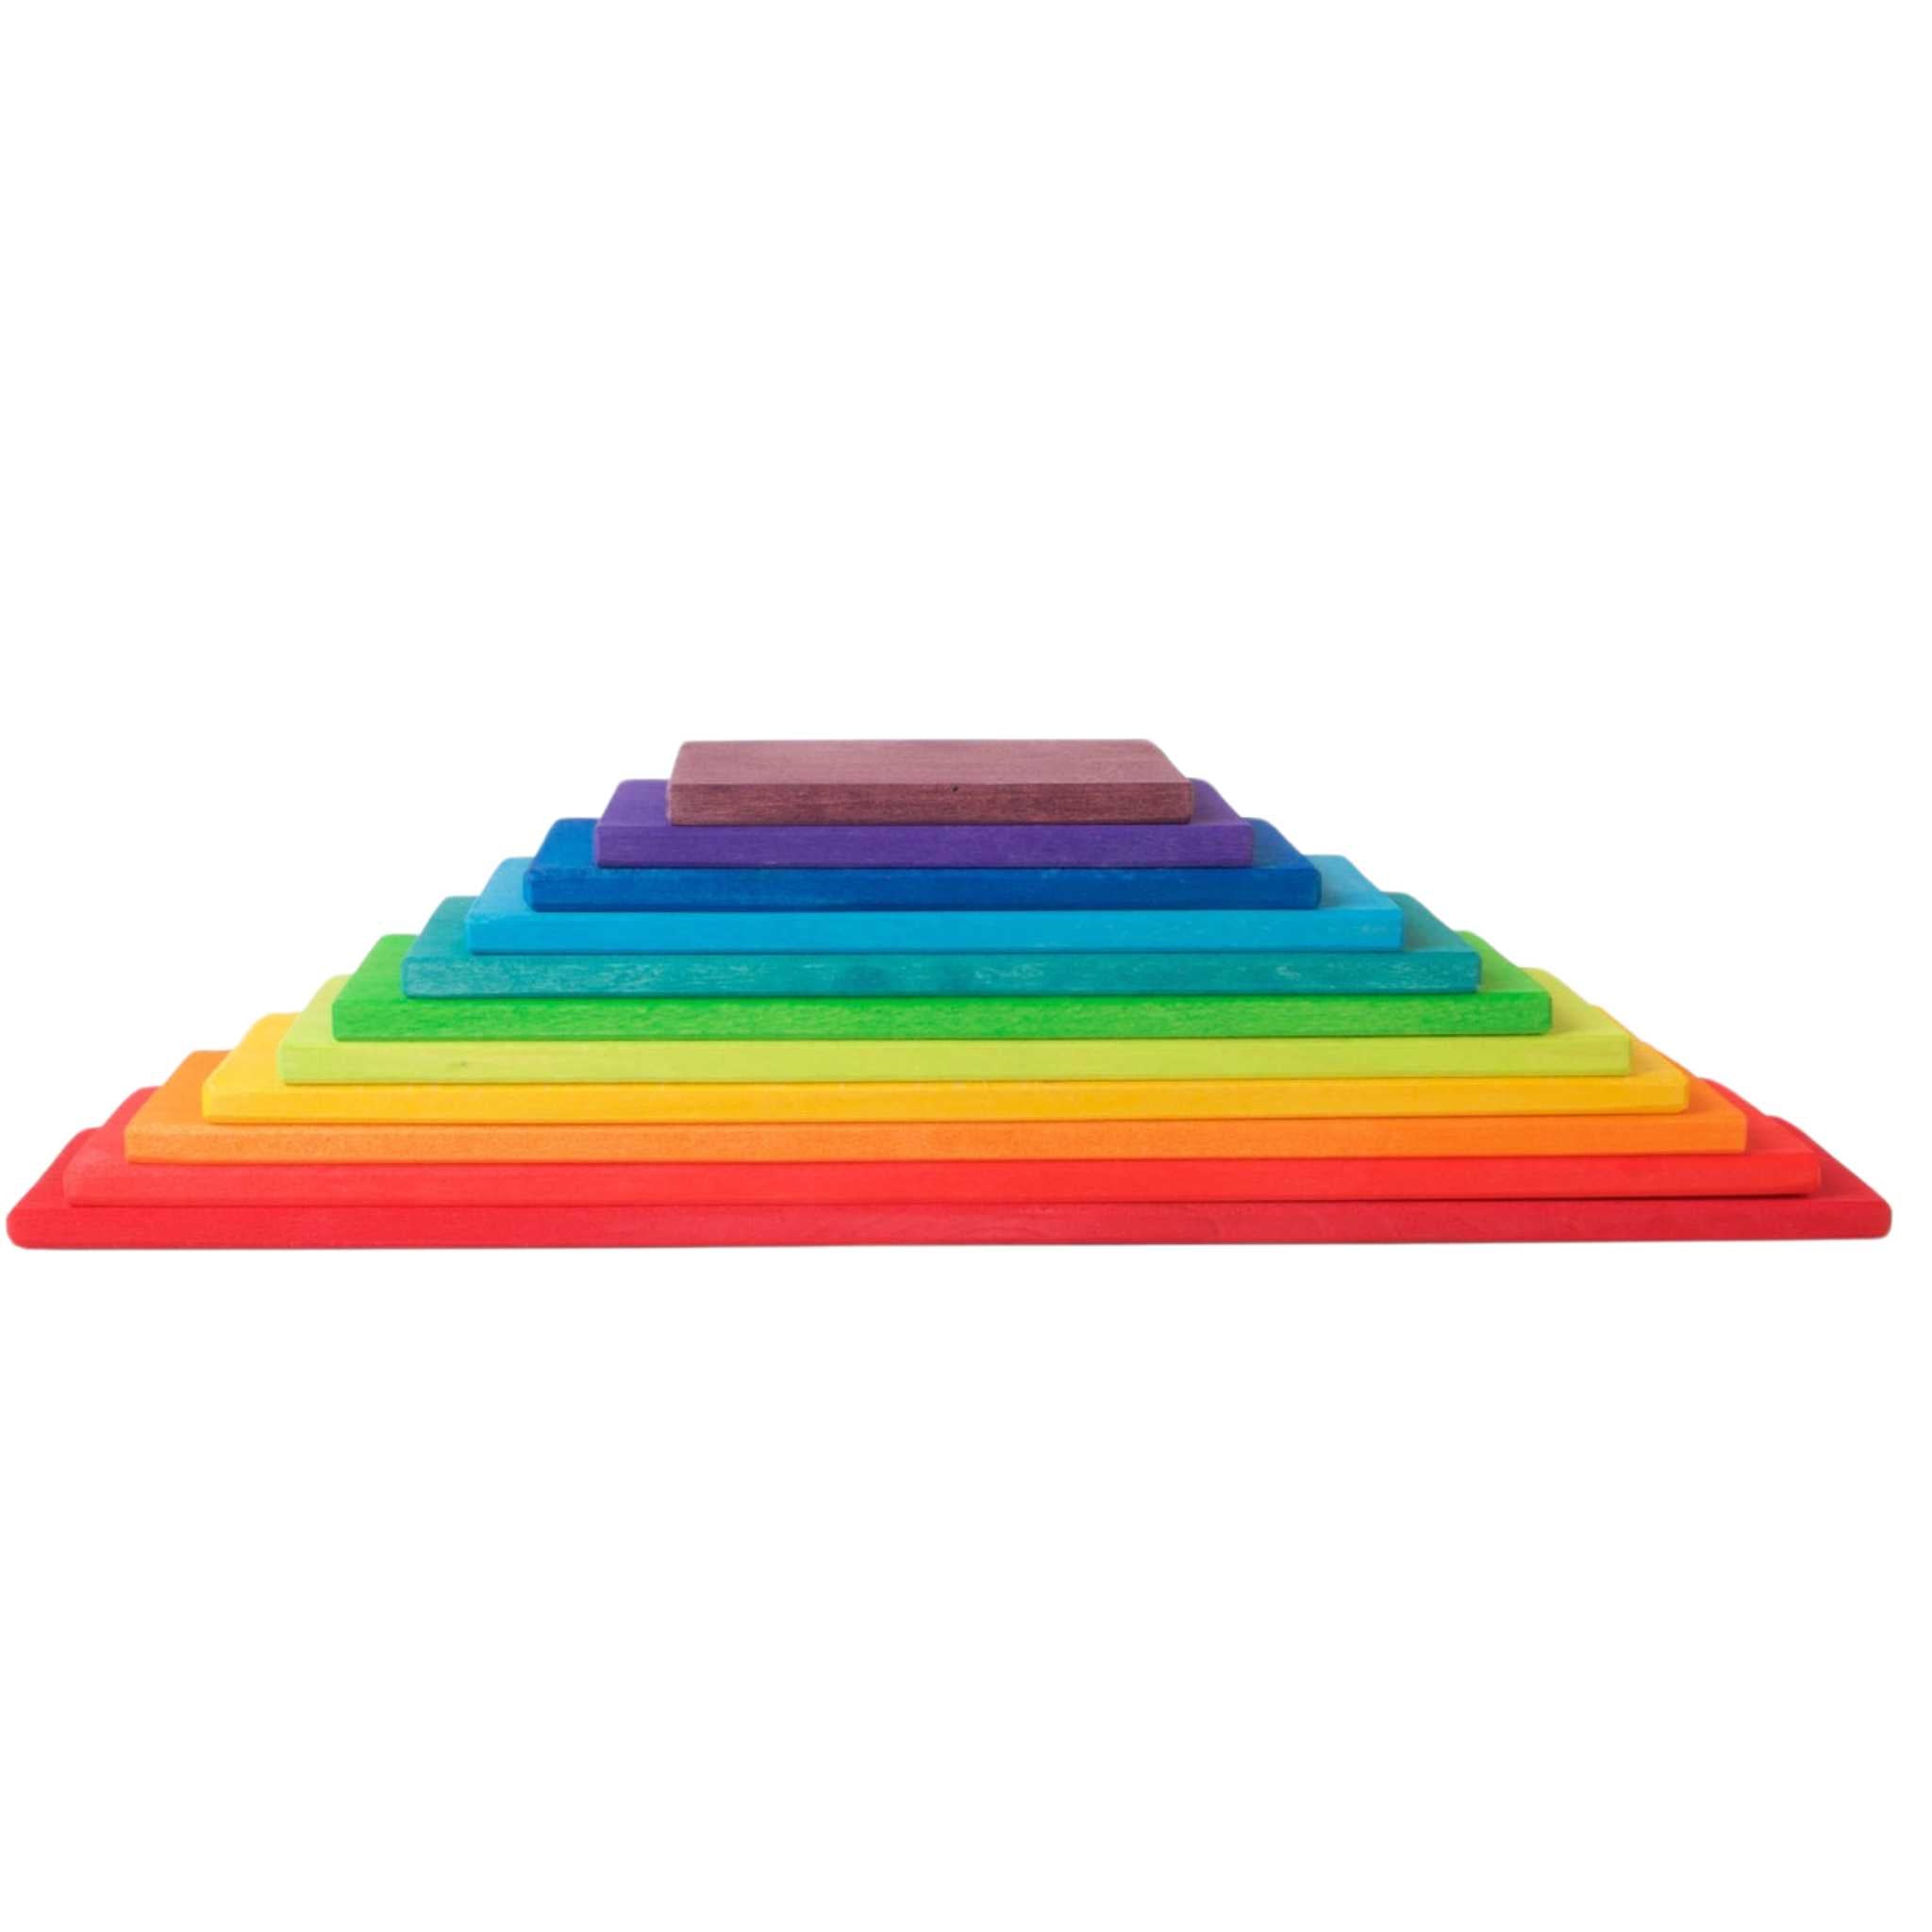 Grimm's Rainbow Building Boards - Main Image 